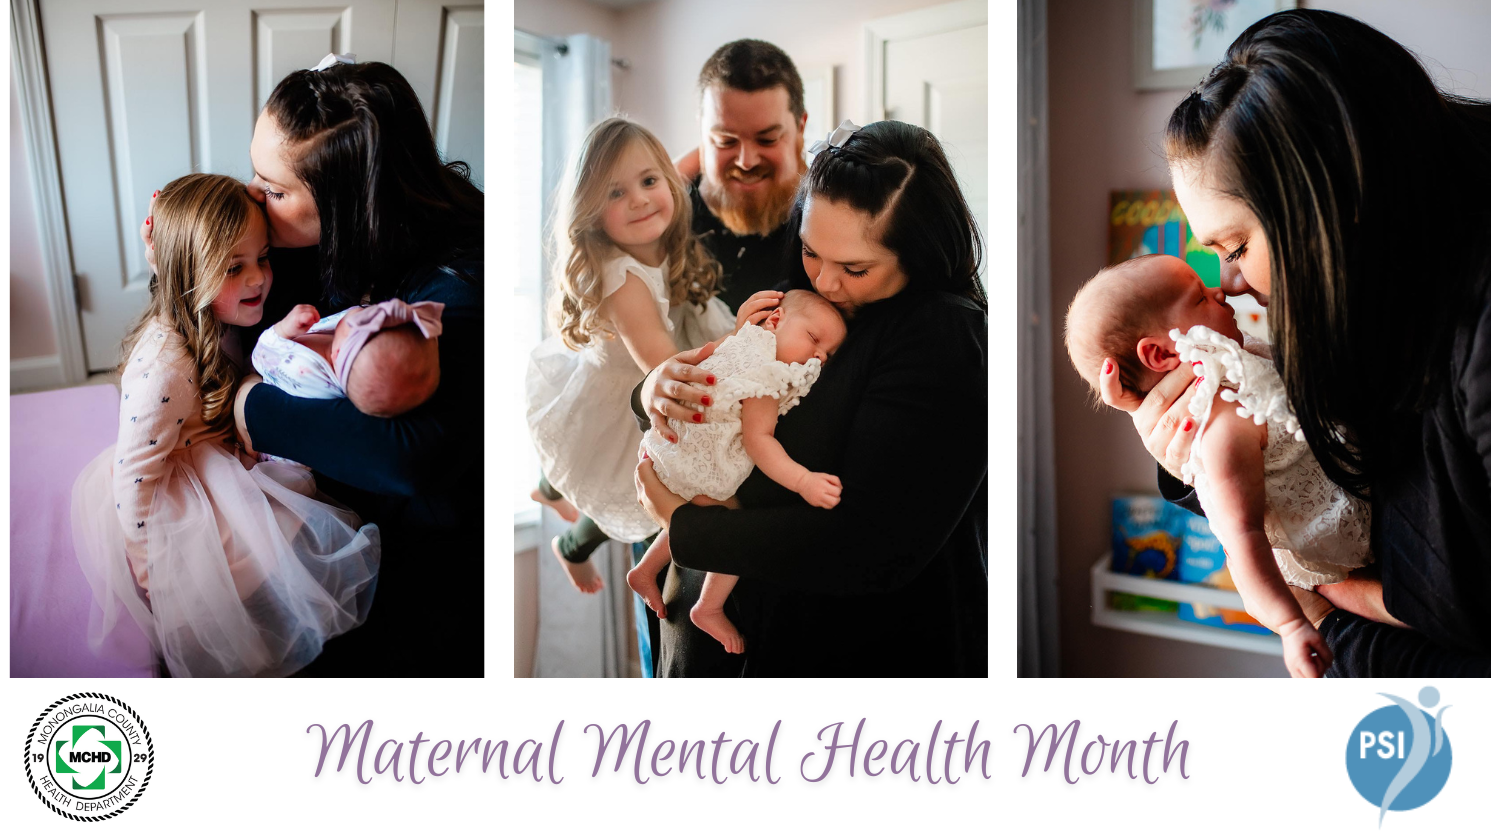 Maternal Mental Health Month addresses postpartum challenges 